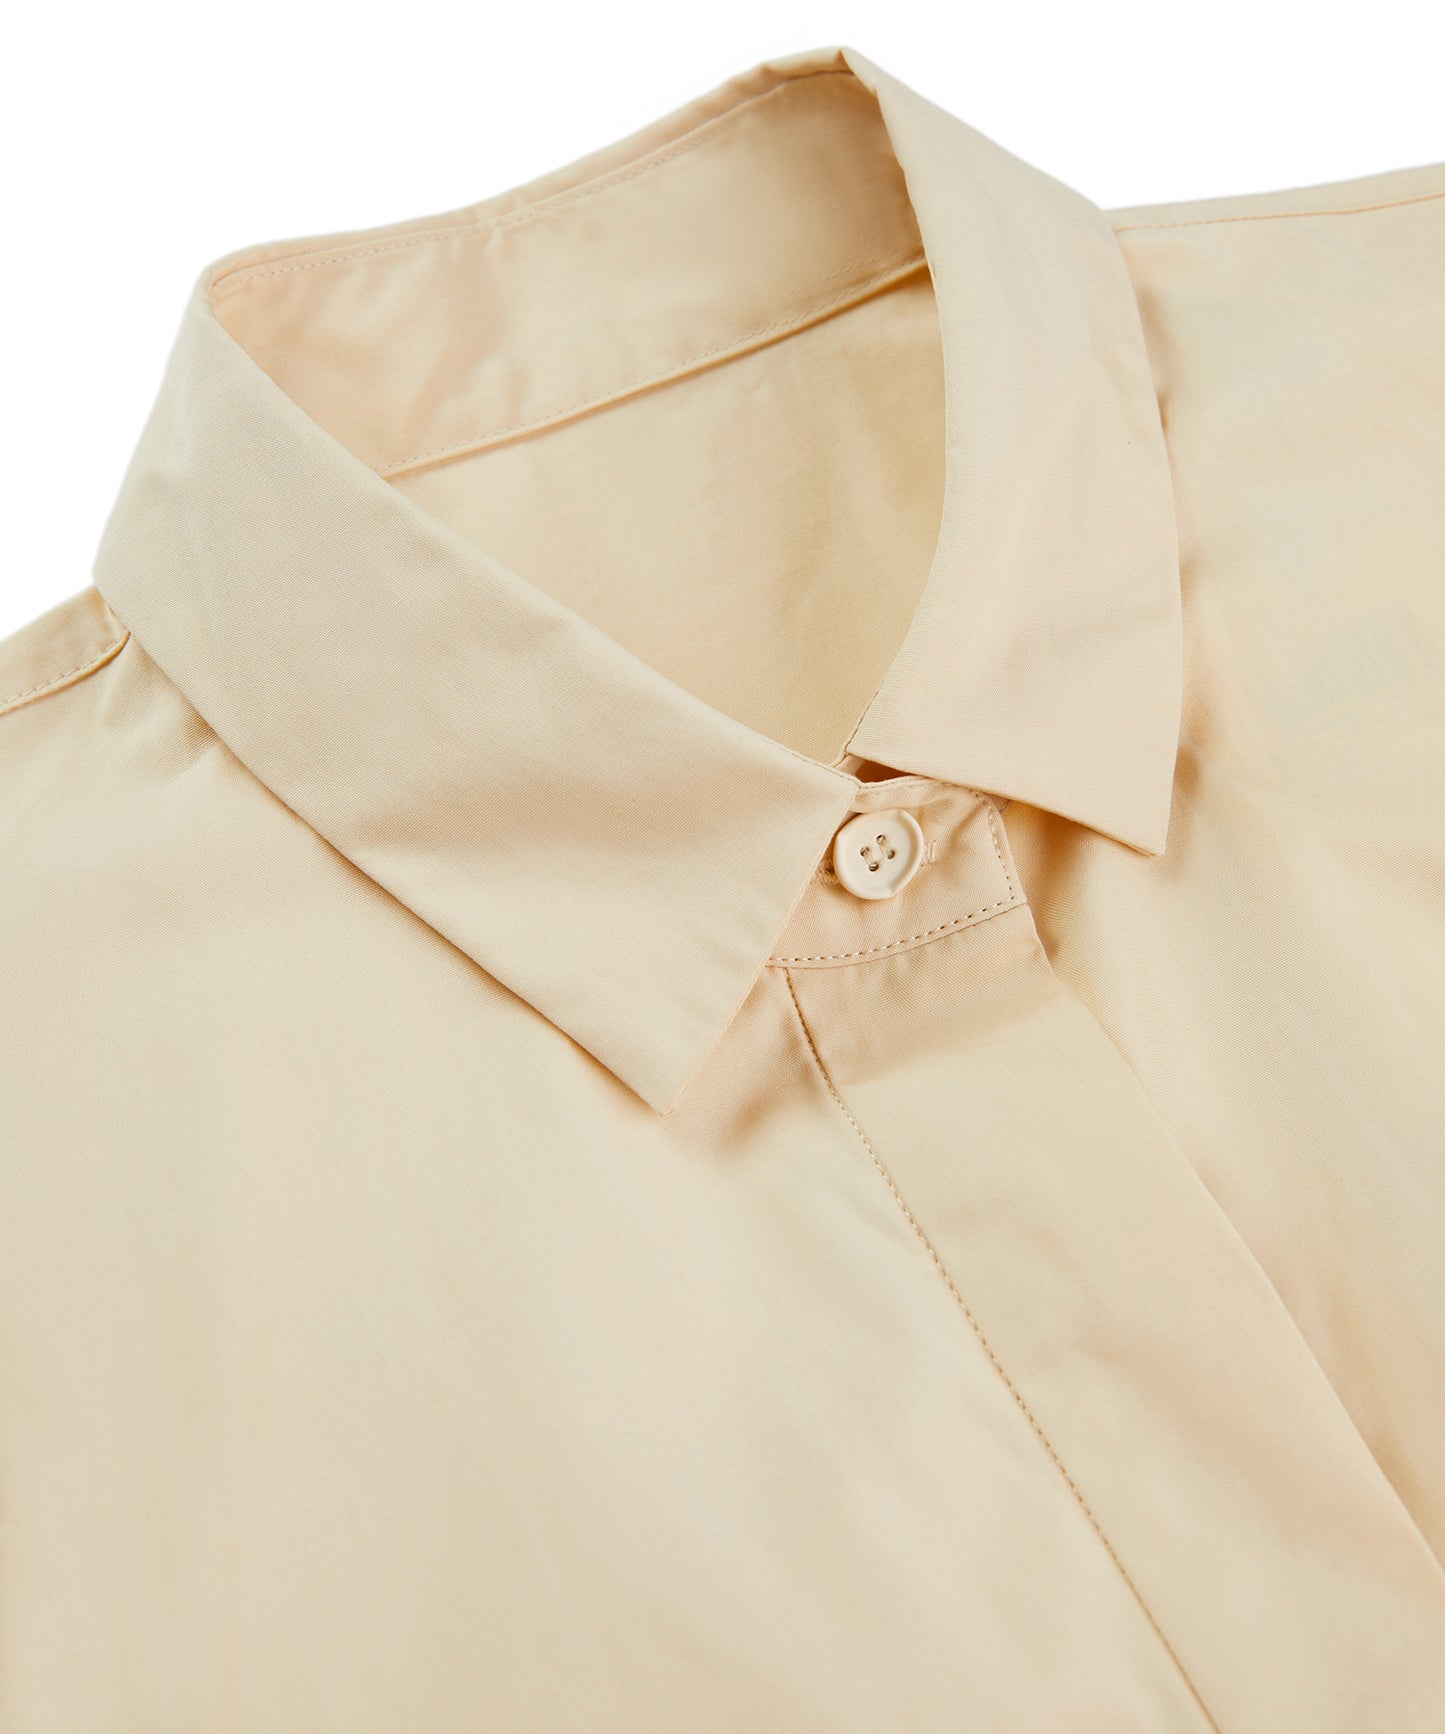 Asymmetric Ruffled Cotton-poplin Shirt